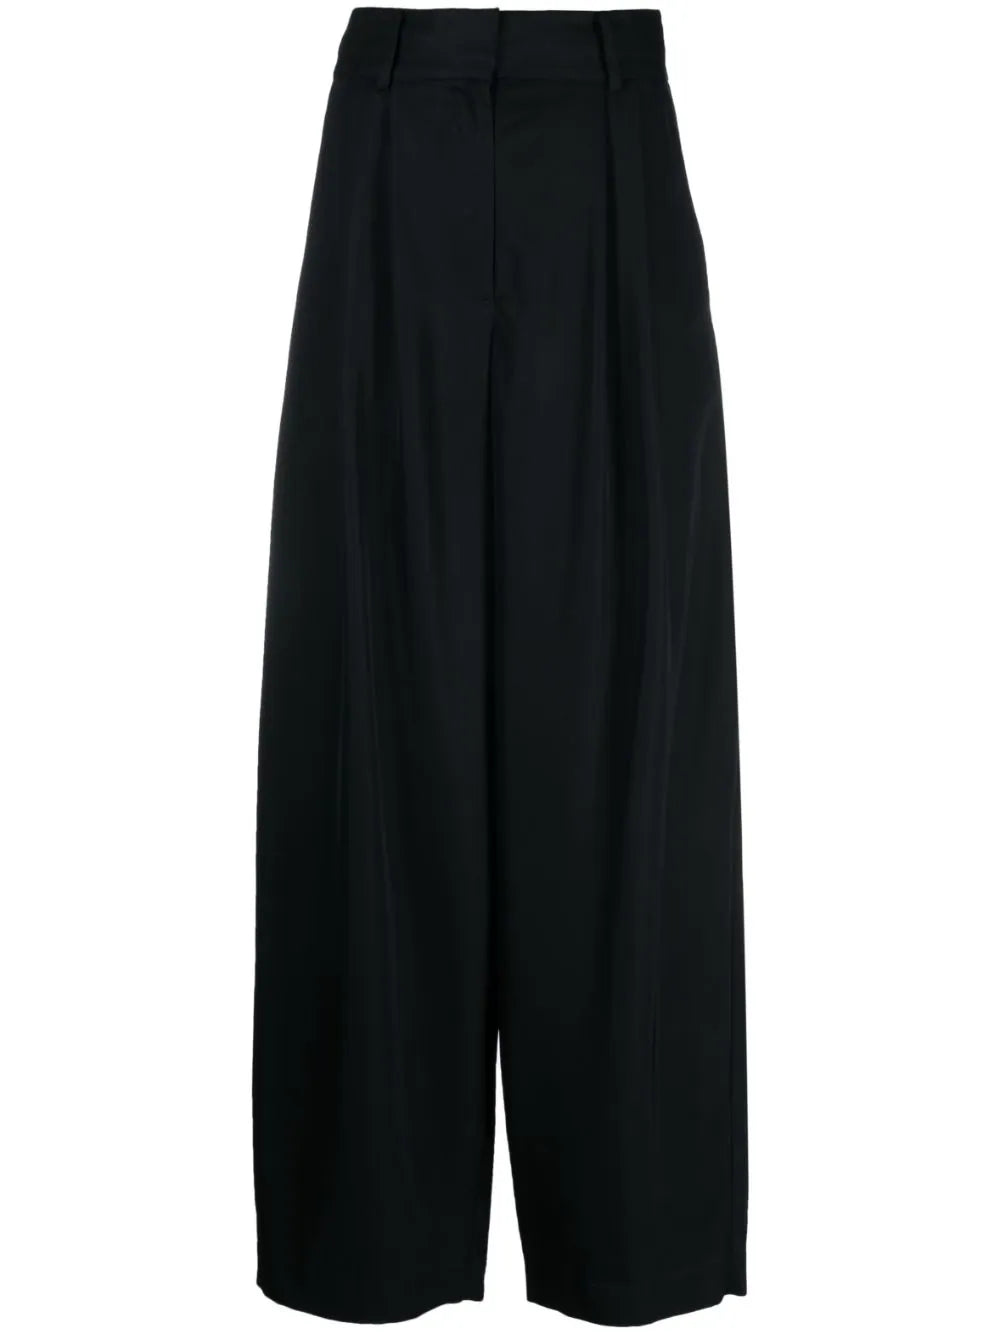 PISCALI mid-waist trousers, black